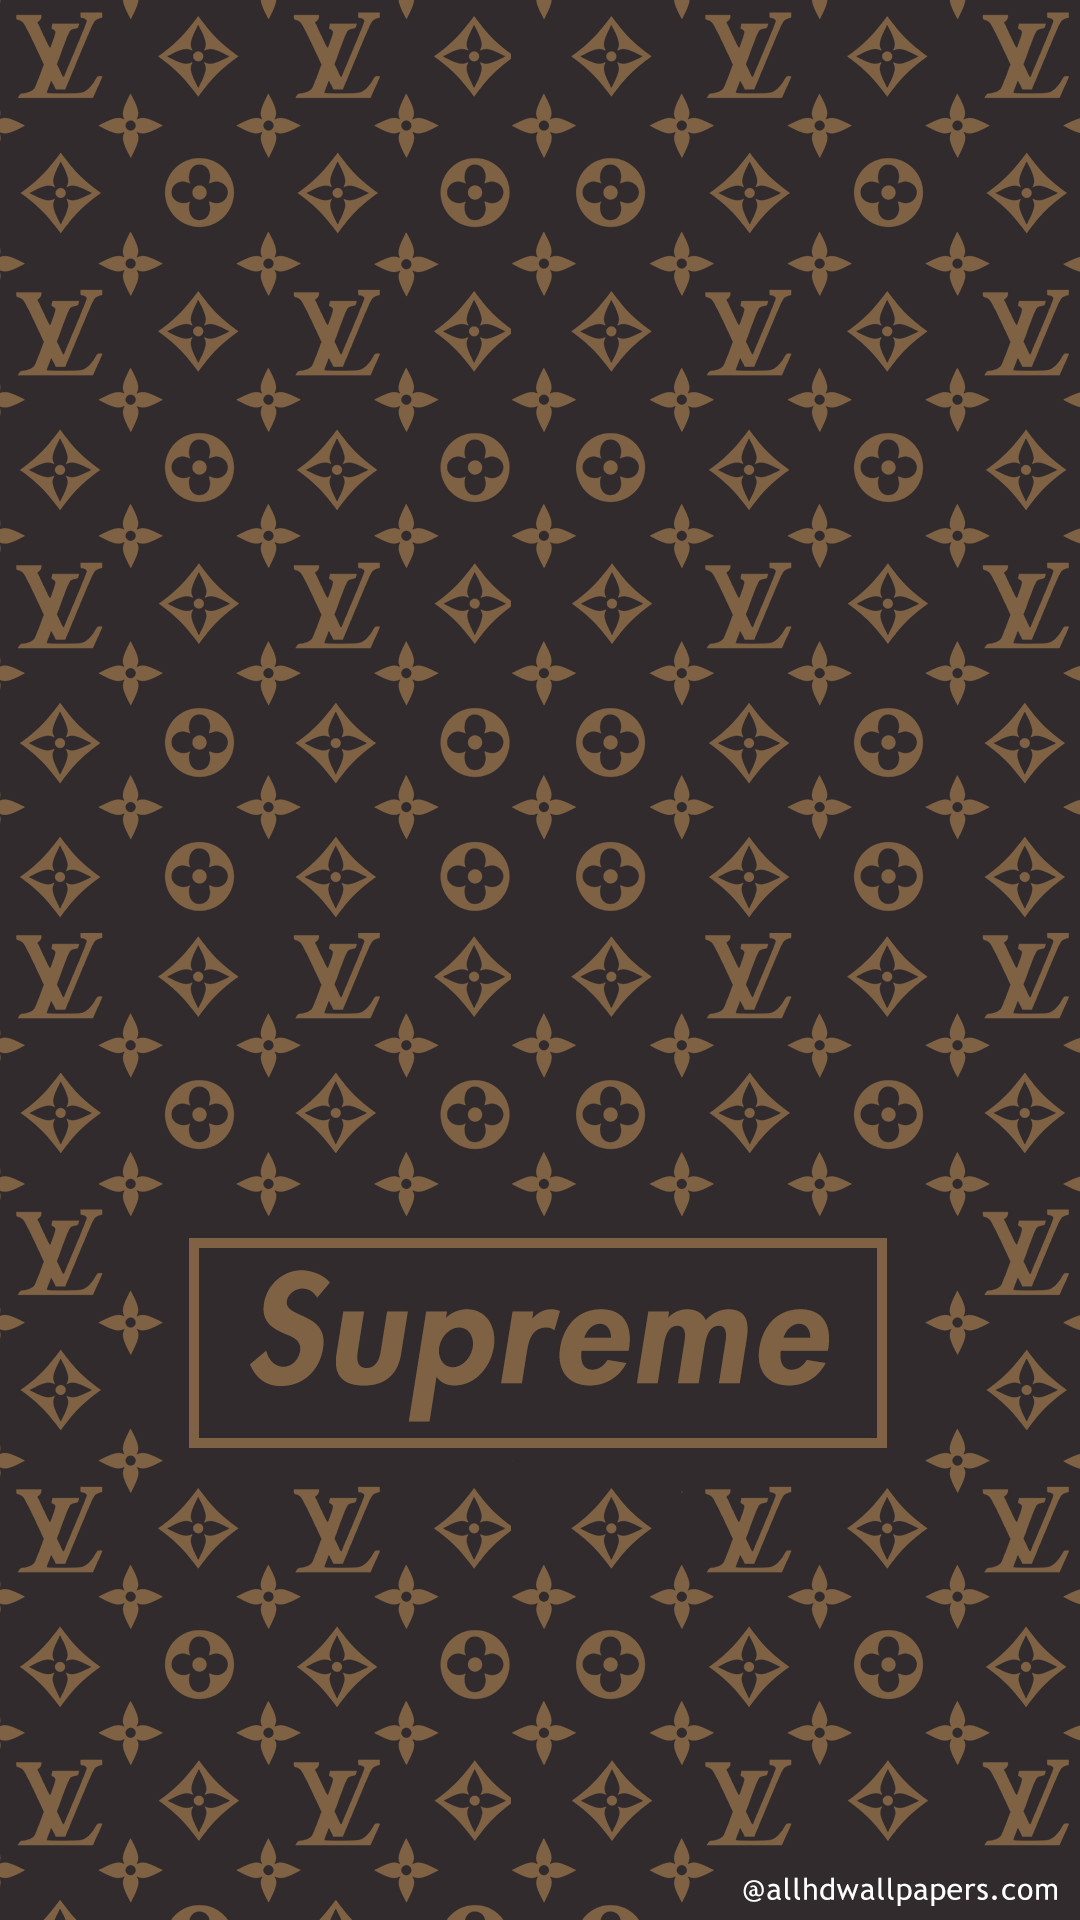 48+] Gucci iPhone Wallpaper Supreme on WallpaperSafari  Supreme iphone  wallpaper, Supreme wallpaper, Iphone wallpaper